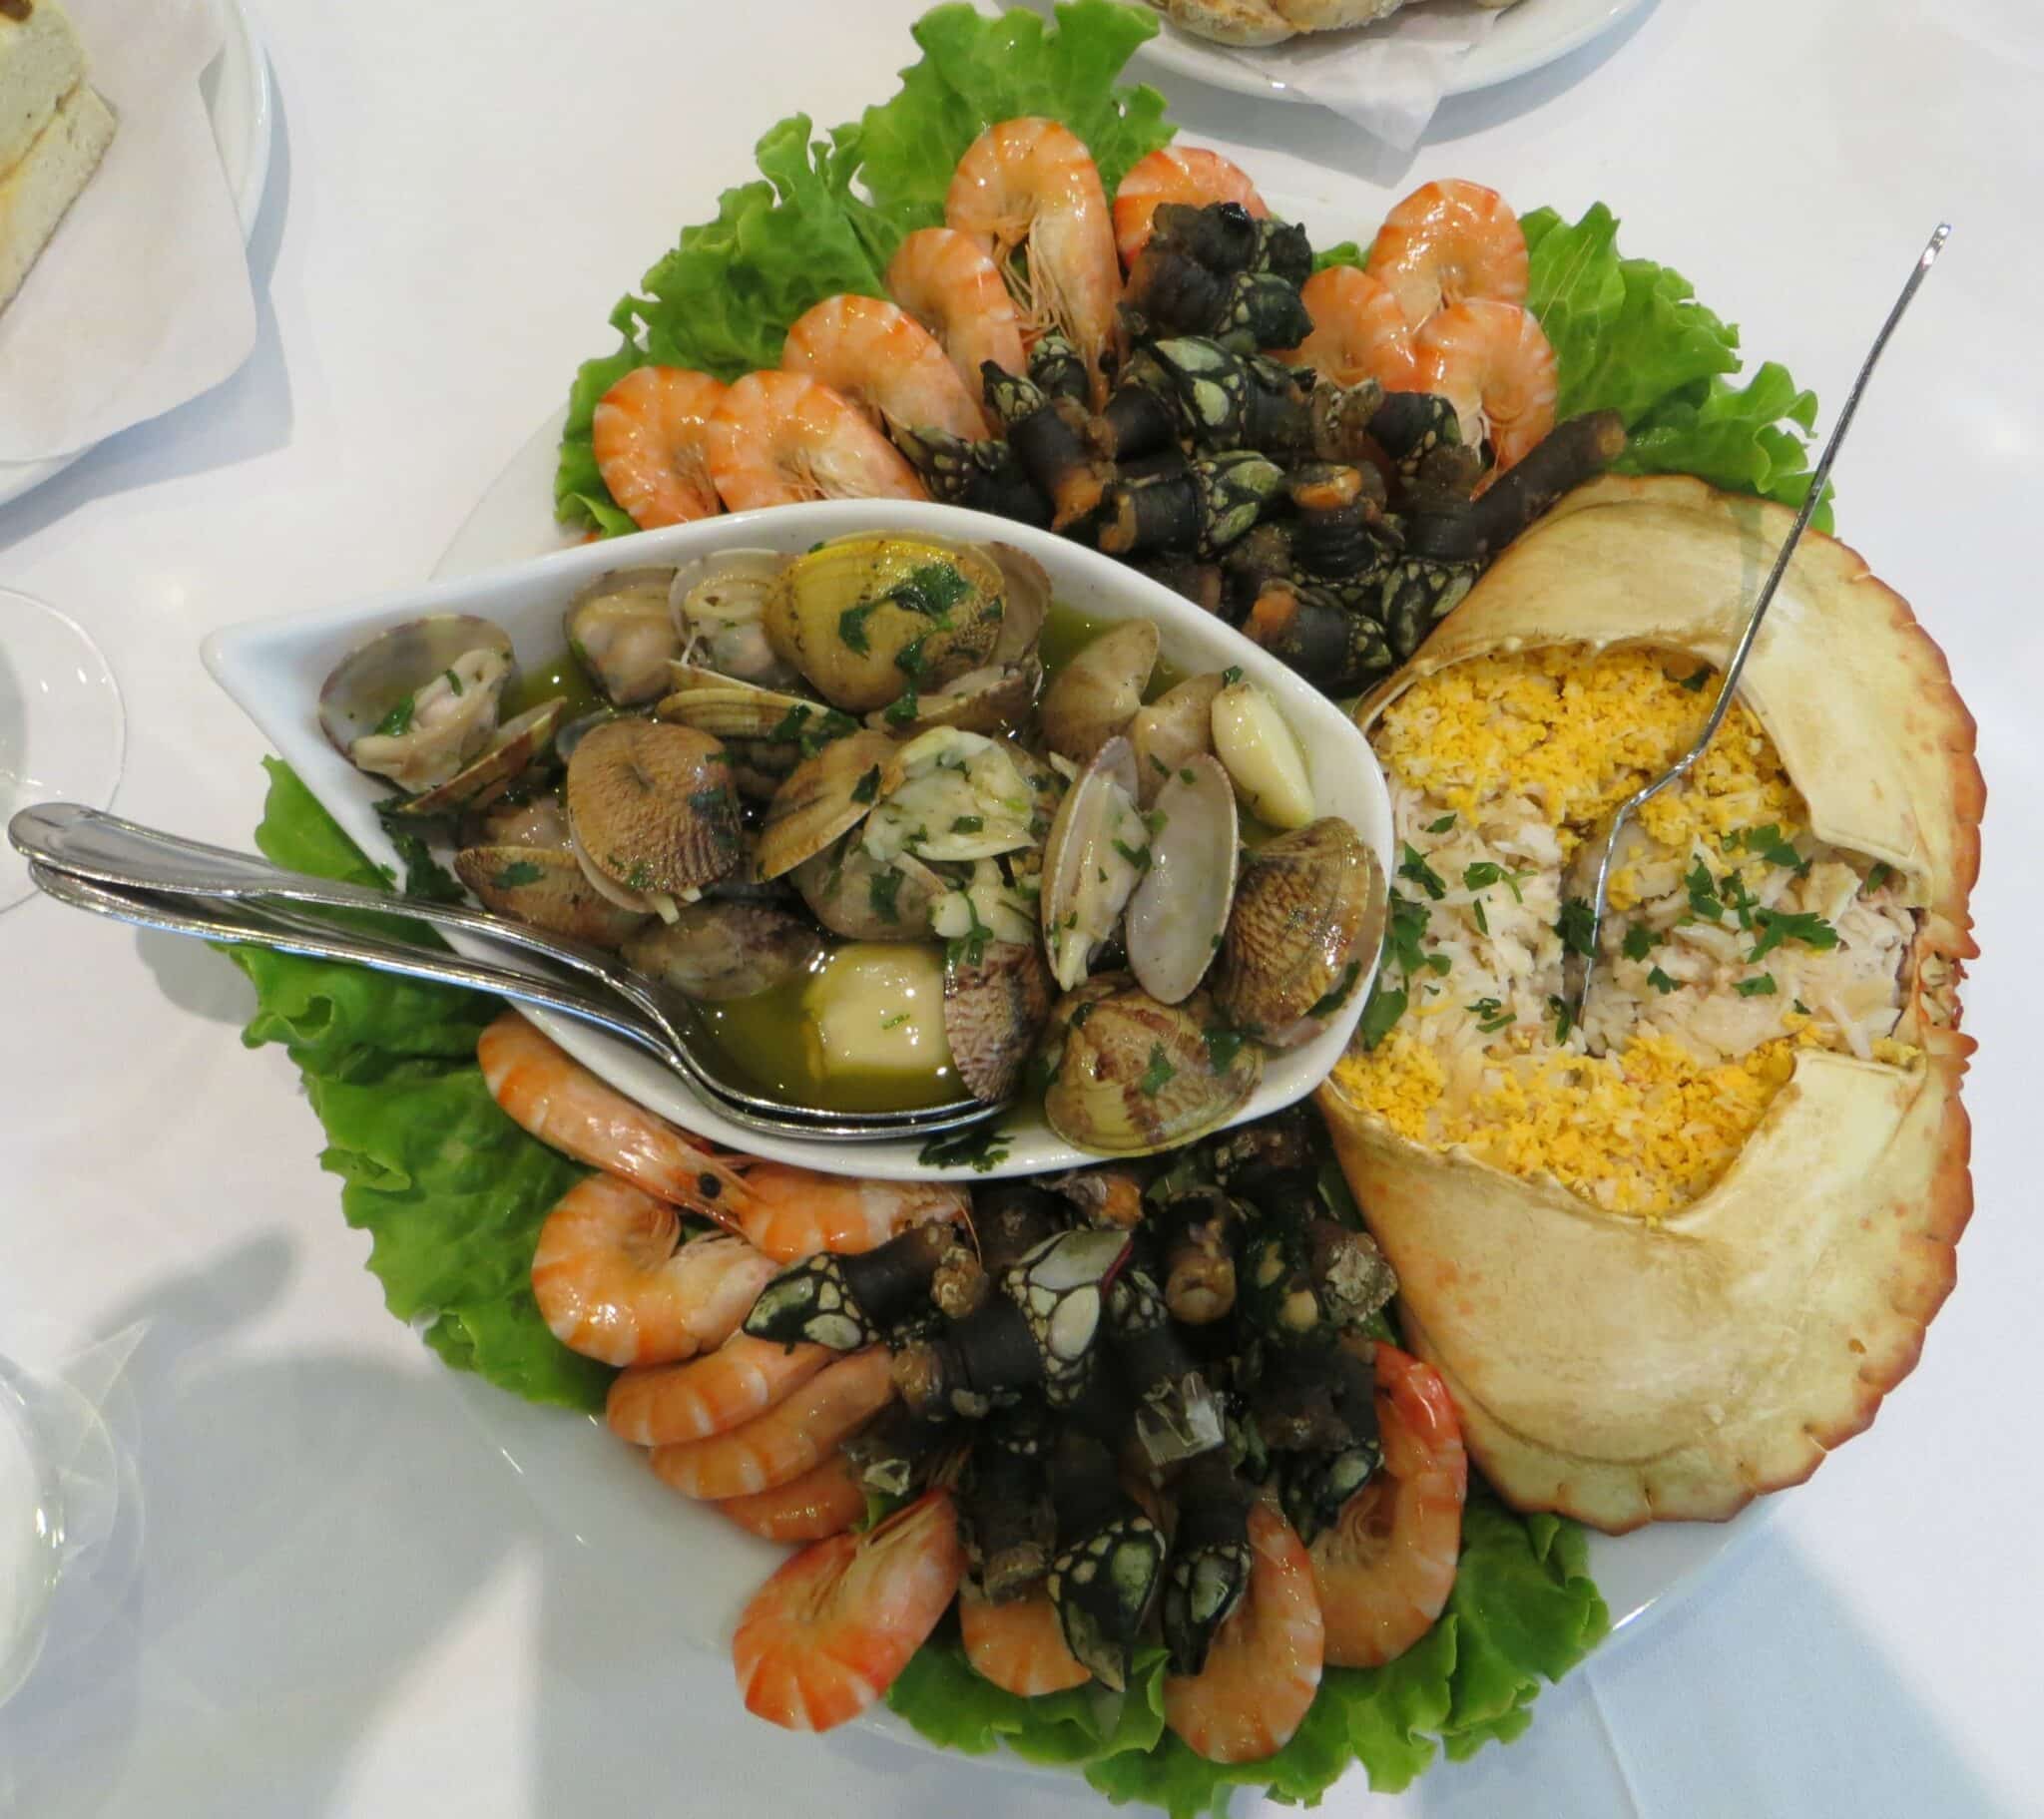 Os Lusíadas Restaurante’s take on crab dip